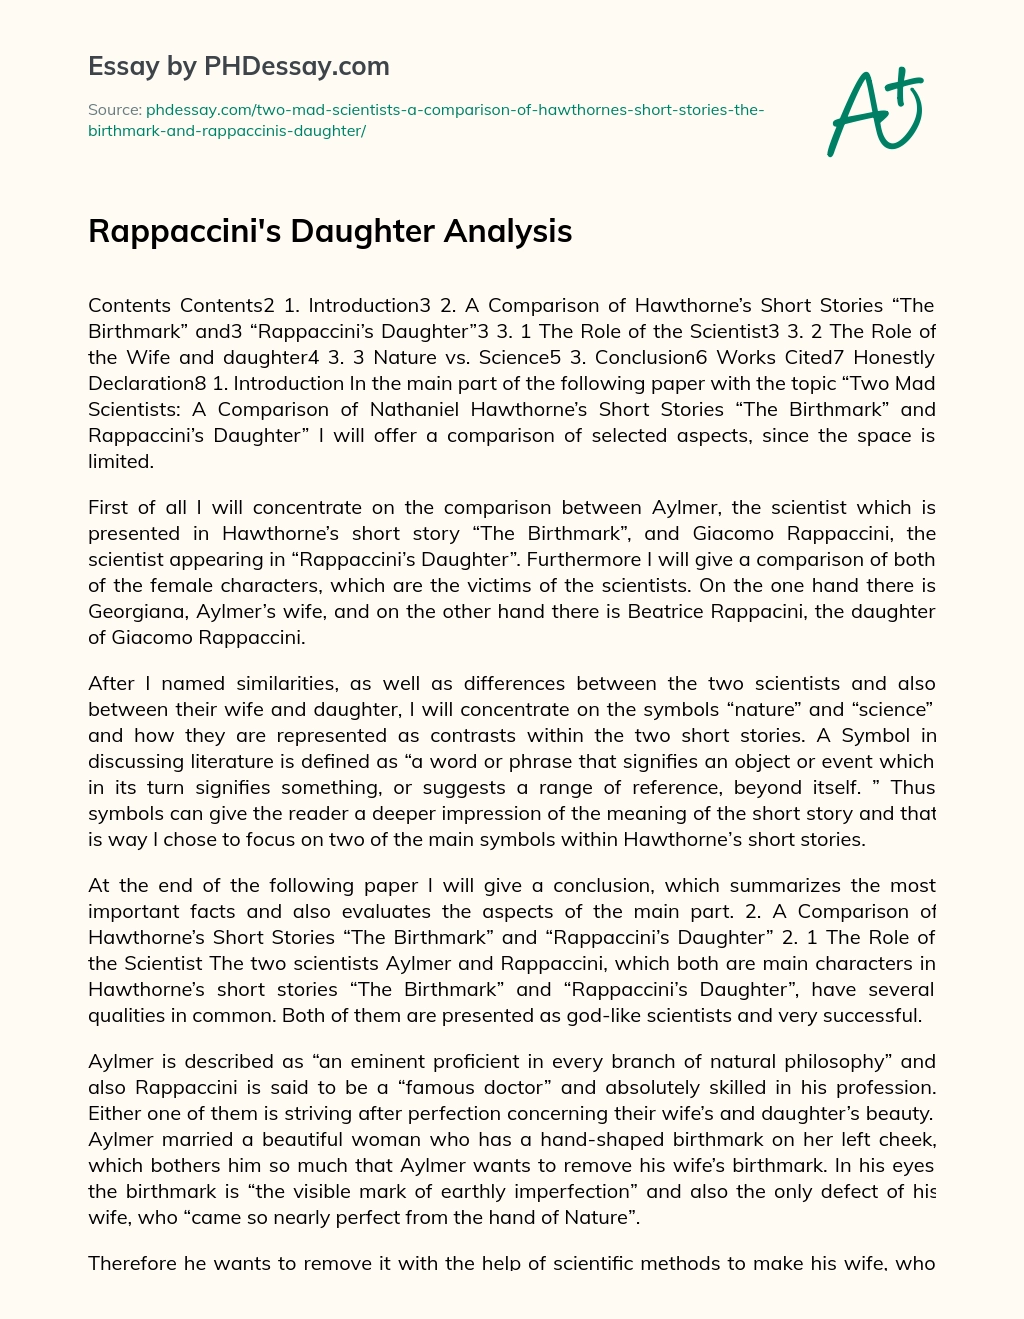 Rappaccini’s Daughter Analysis essay